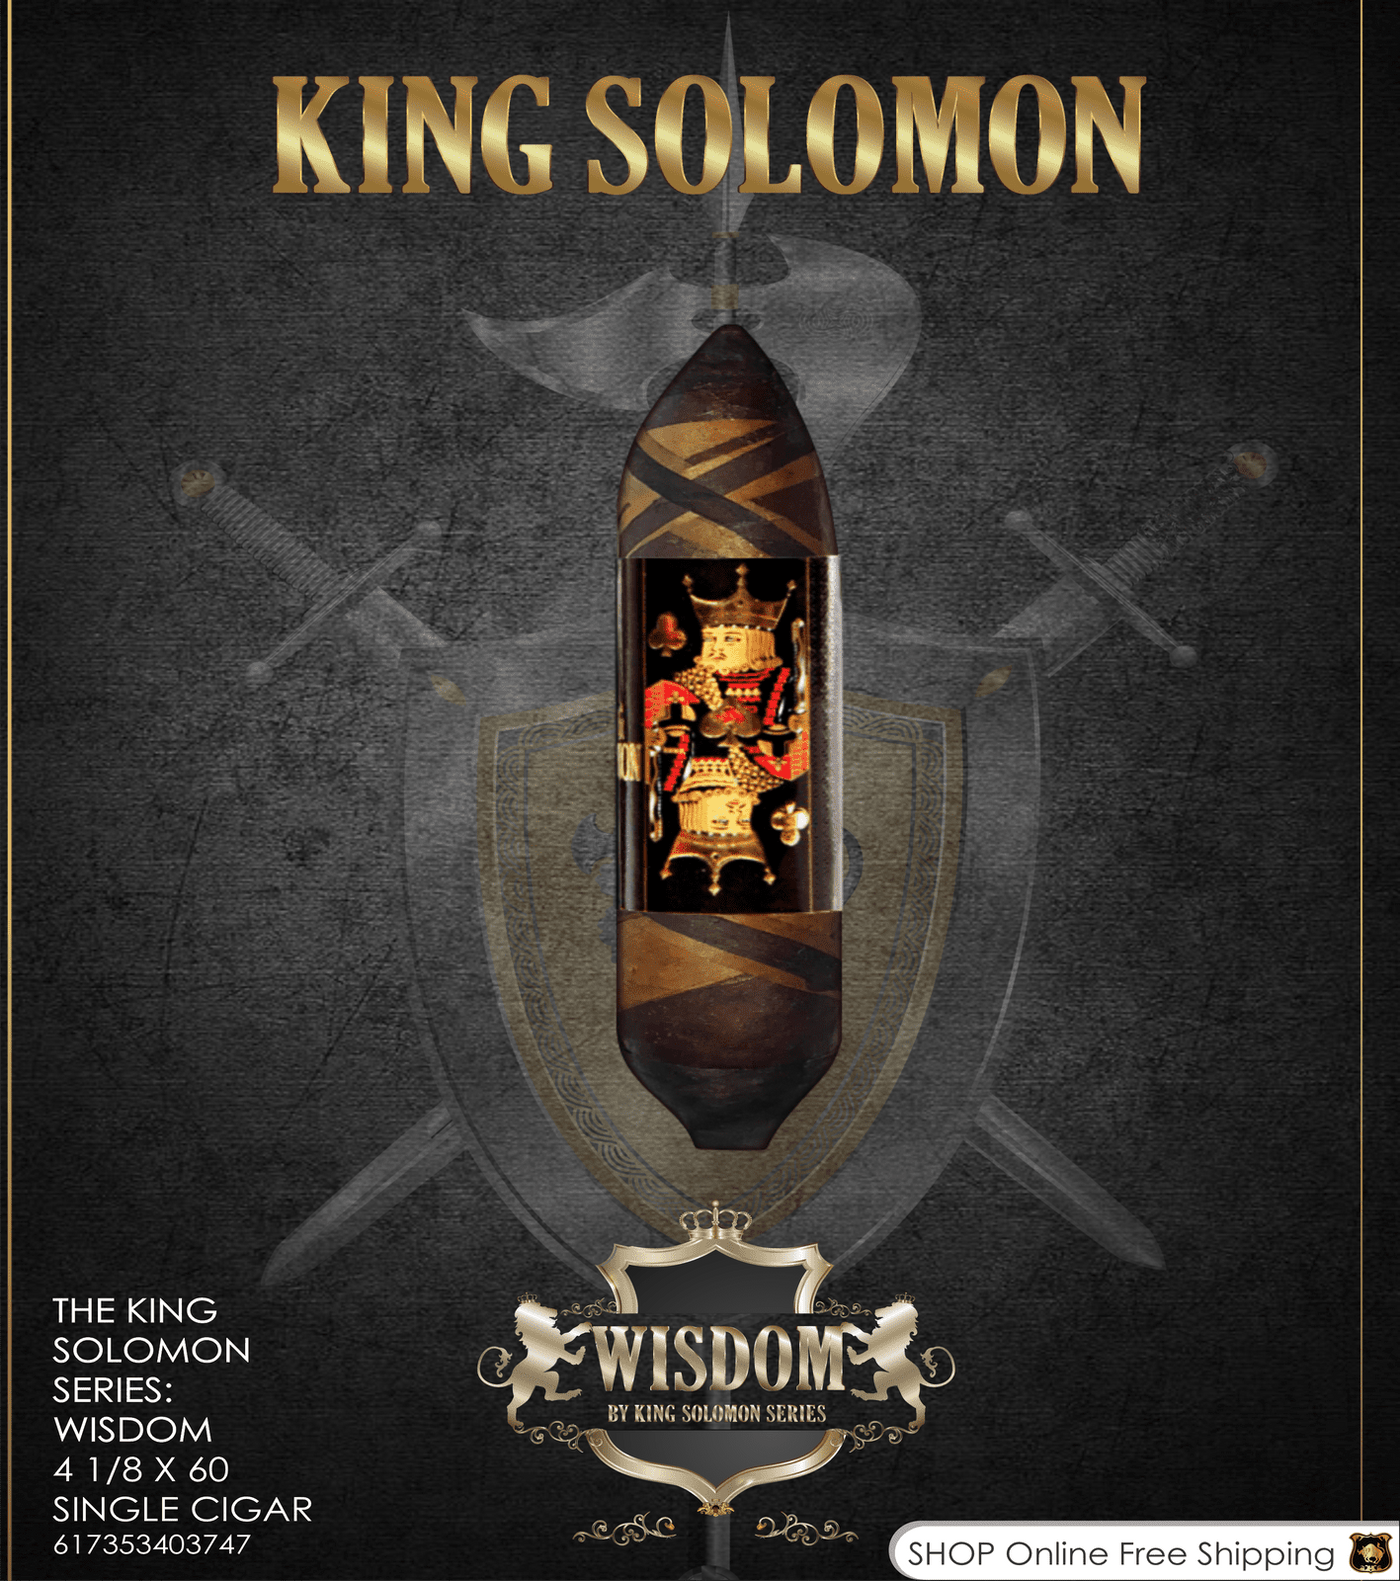 Wisdom 4x60 Cigar From The King Solomon Series - Single Cigar